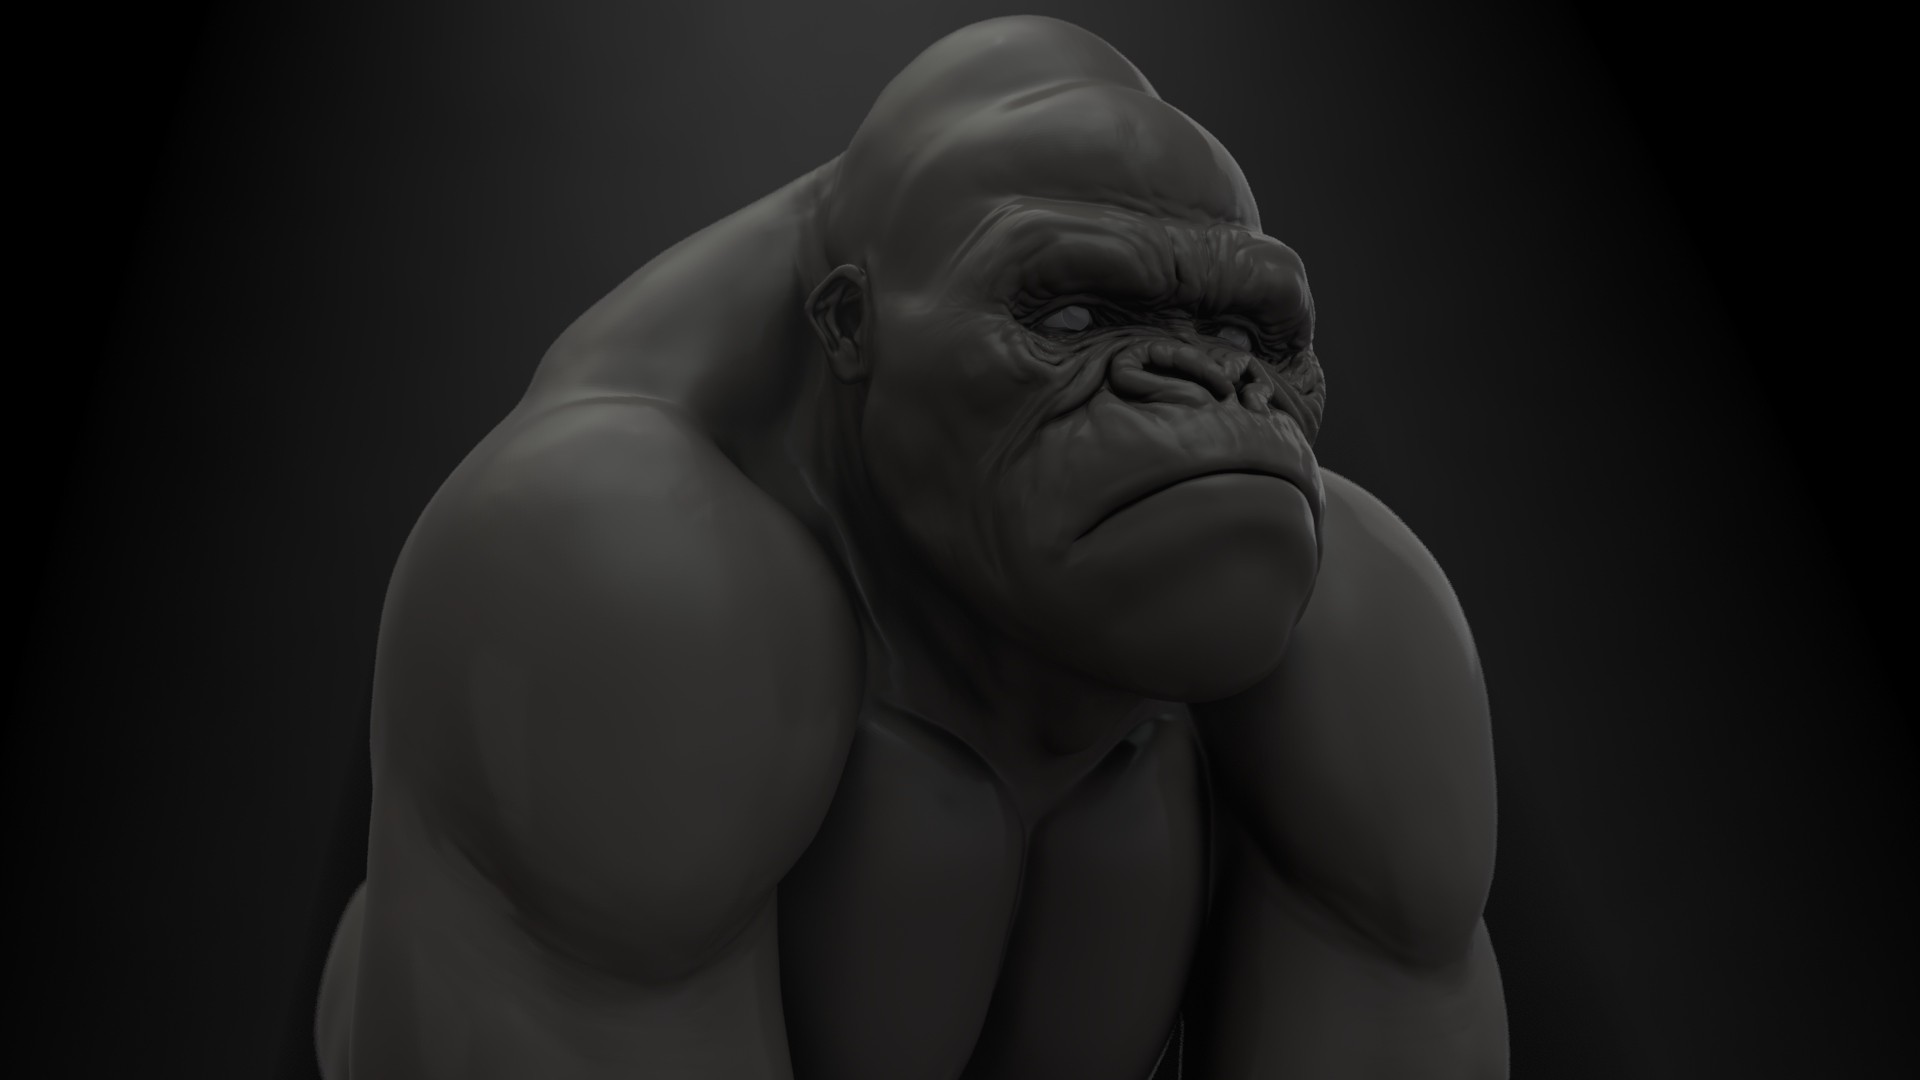 silverback gorilla muscles